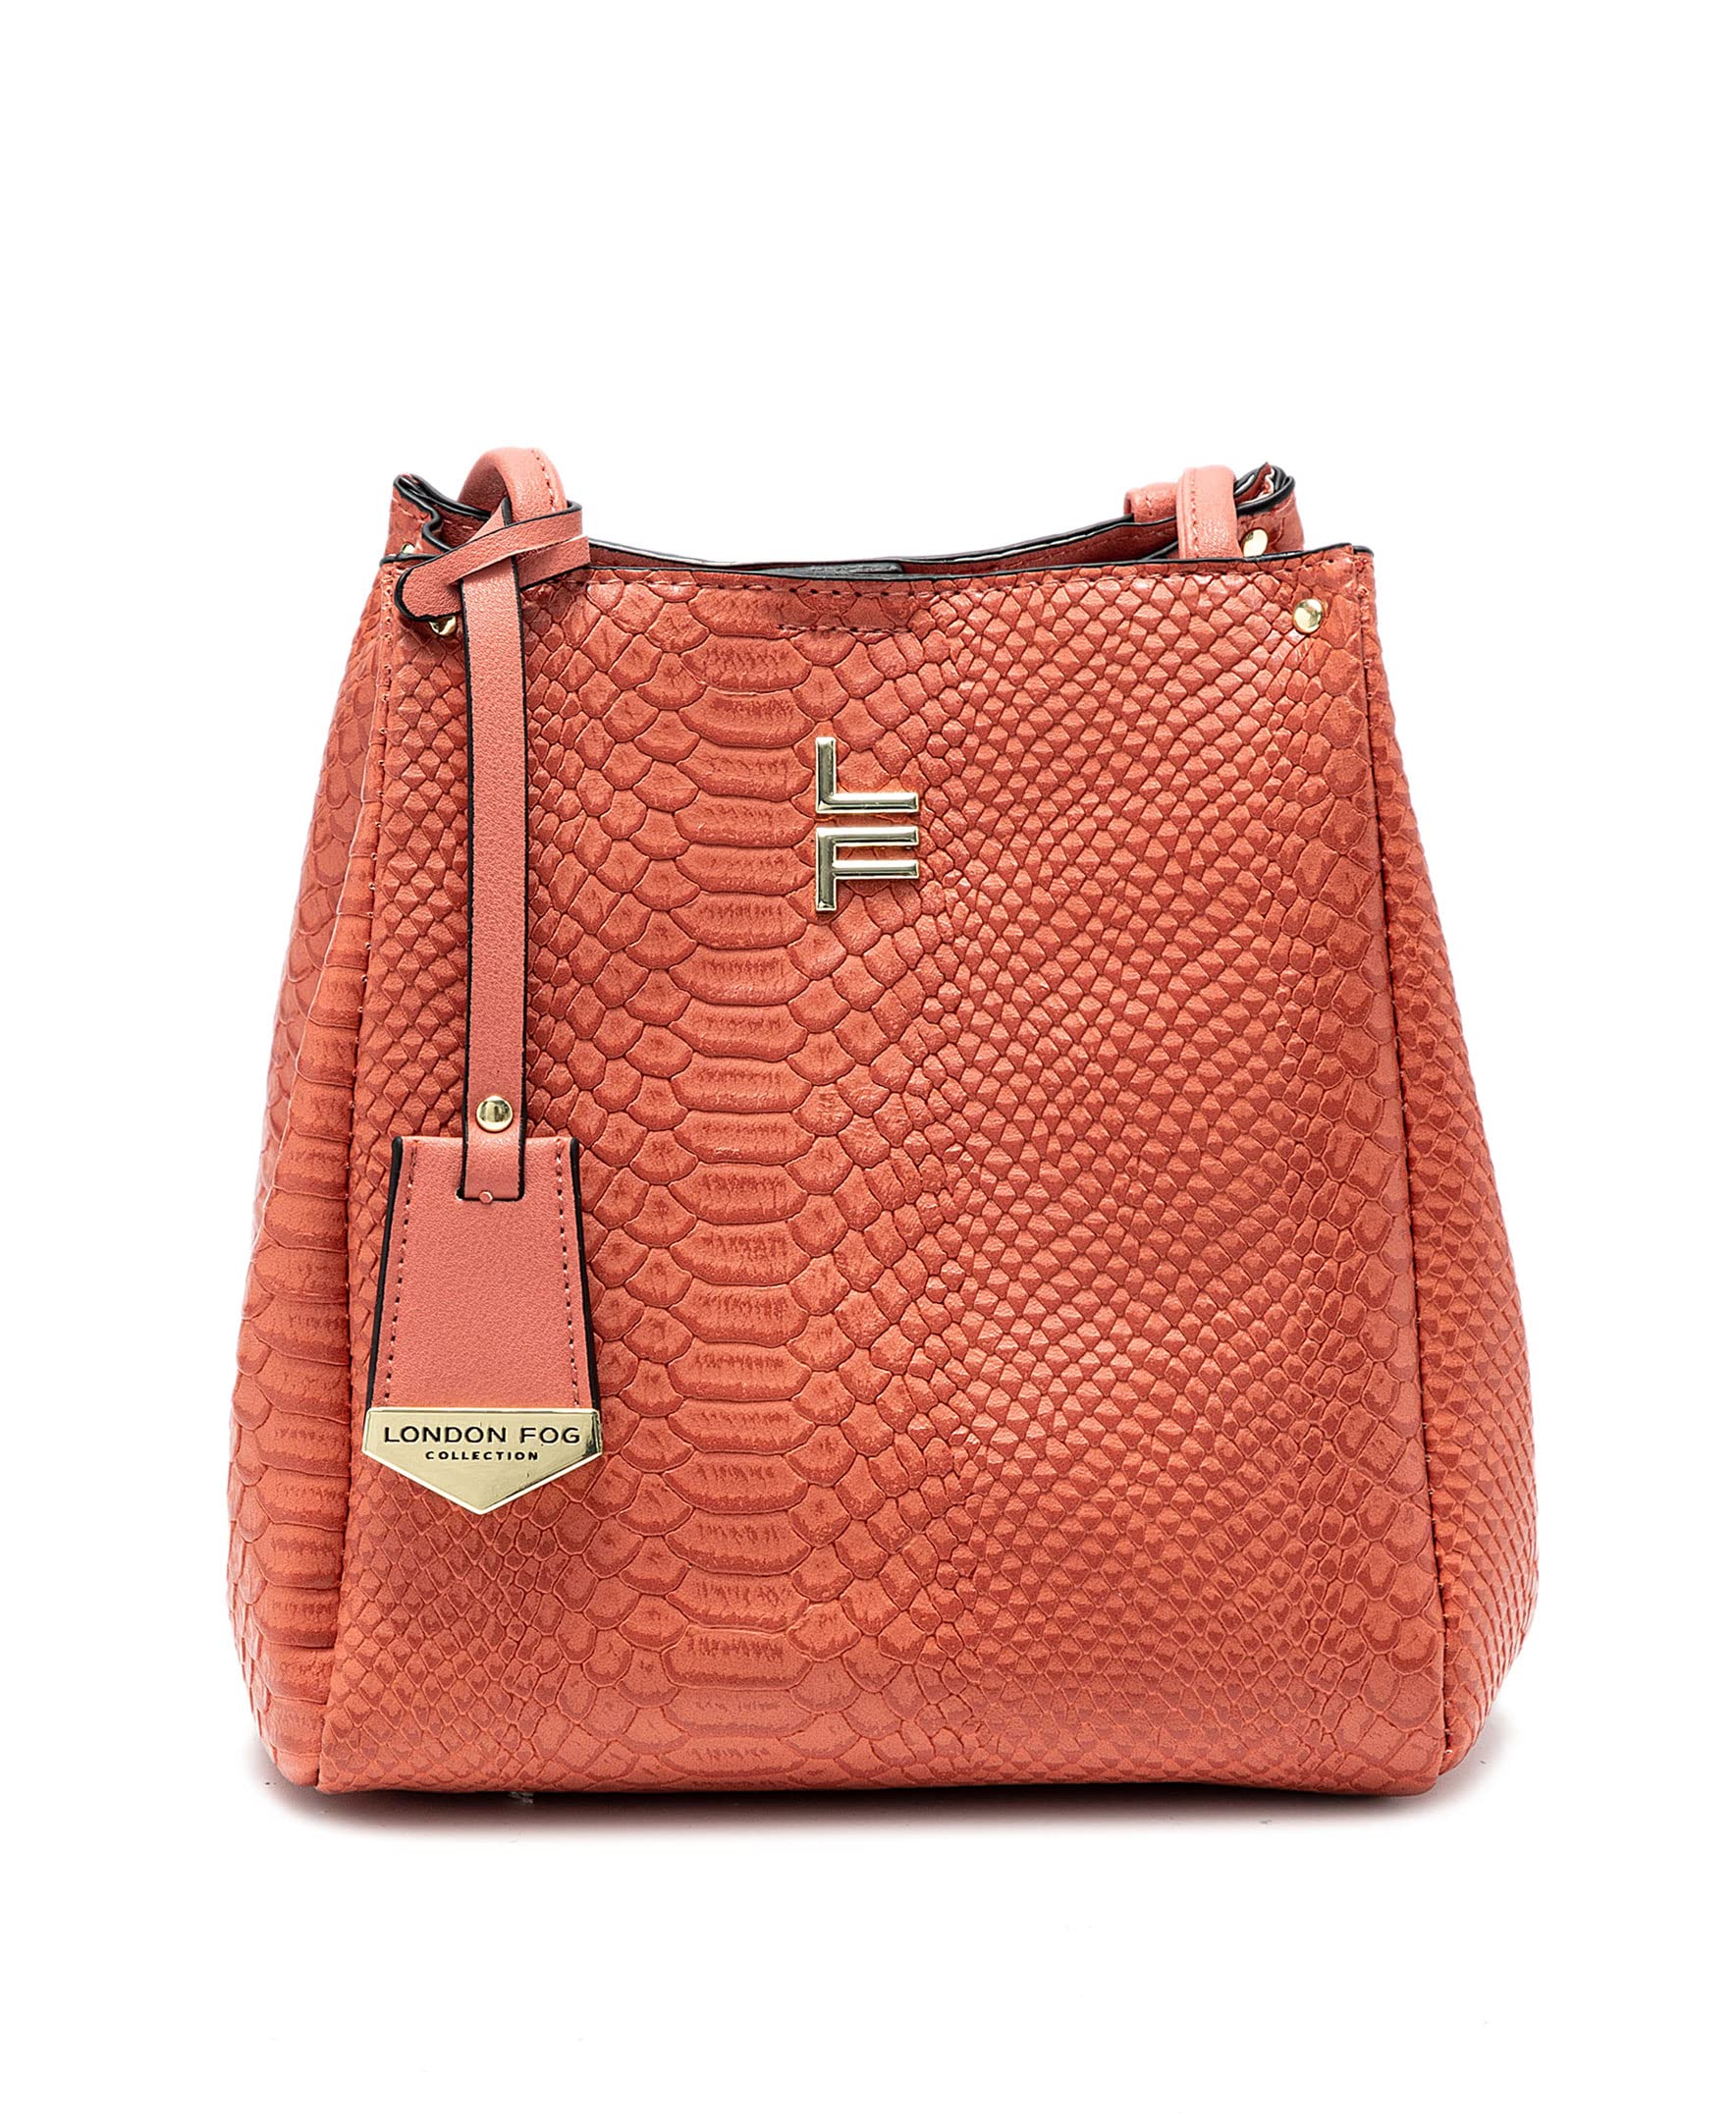 LONDON FOG COCO Shoulder Bag for Women, Vegan Leather Handbags